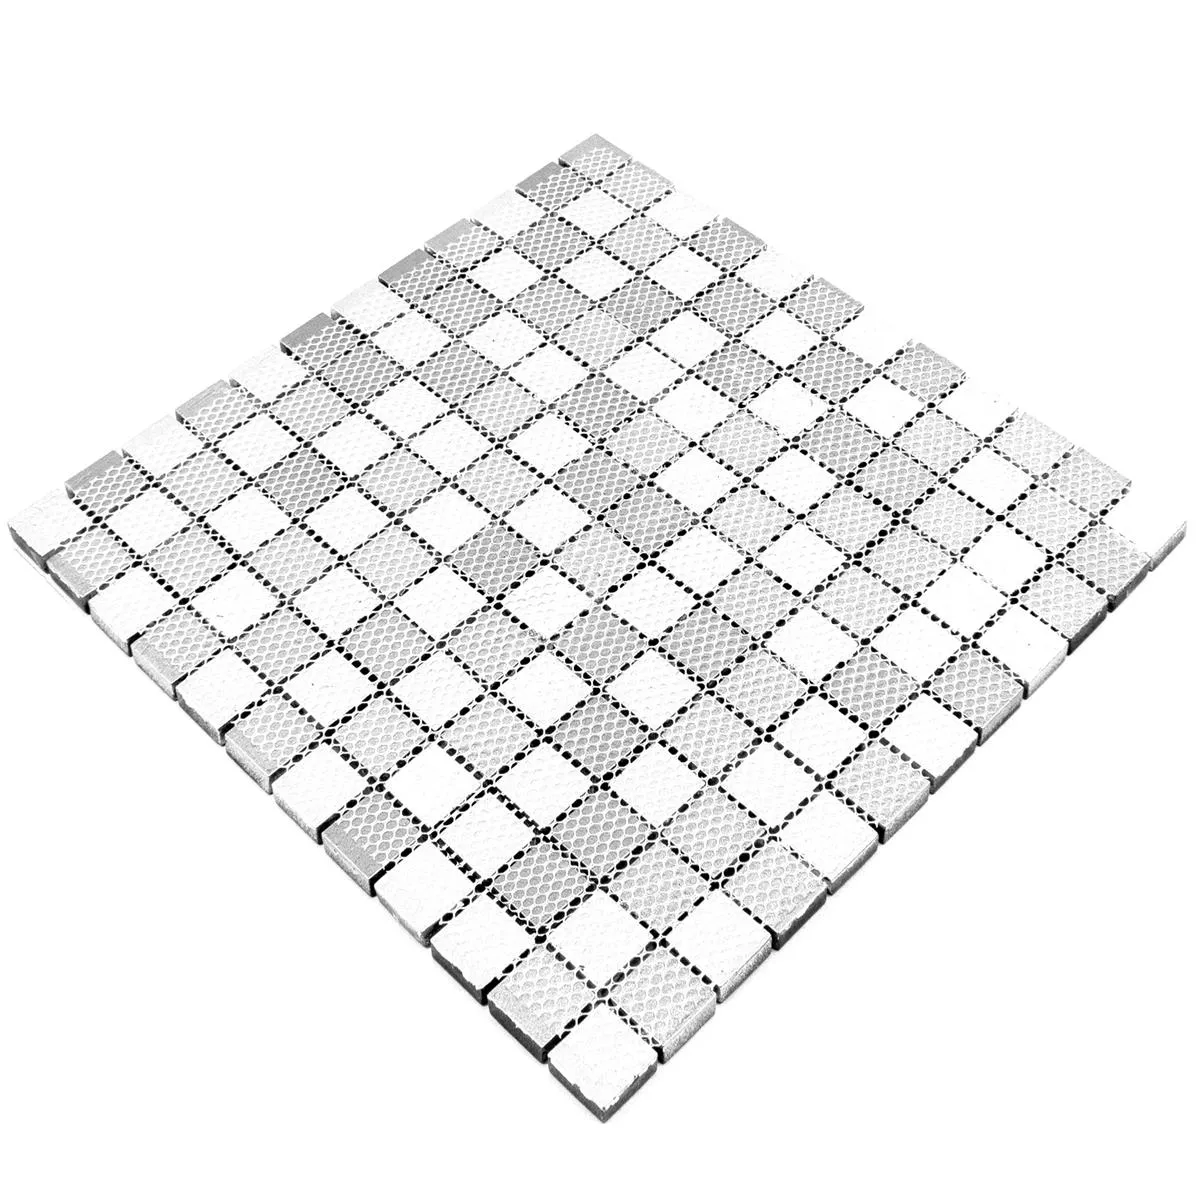 Marble Natural Stone Mosaic Tiles Stanford Grey Blanc